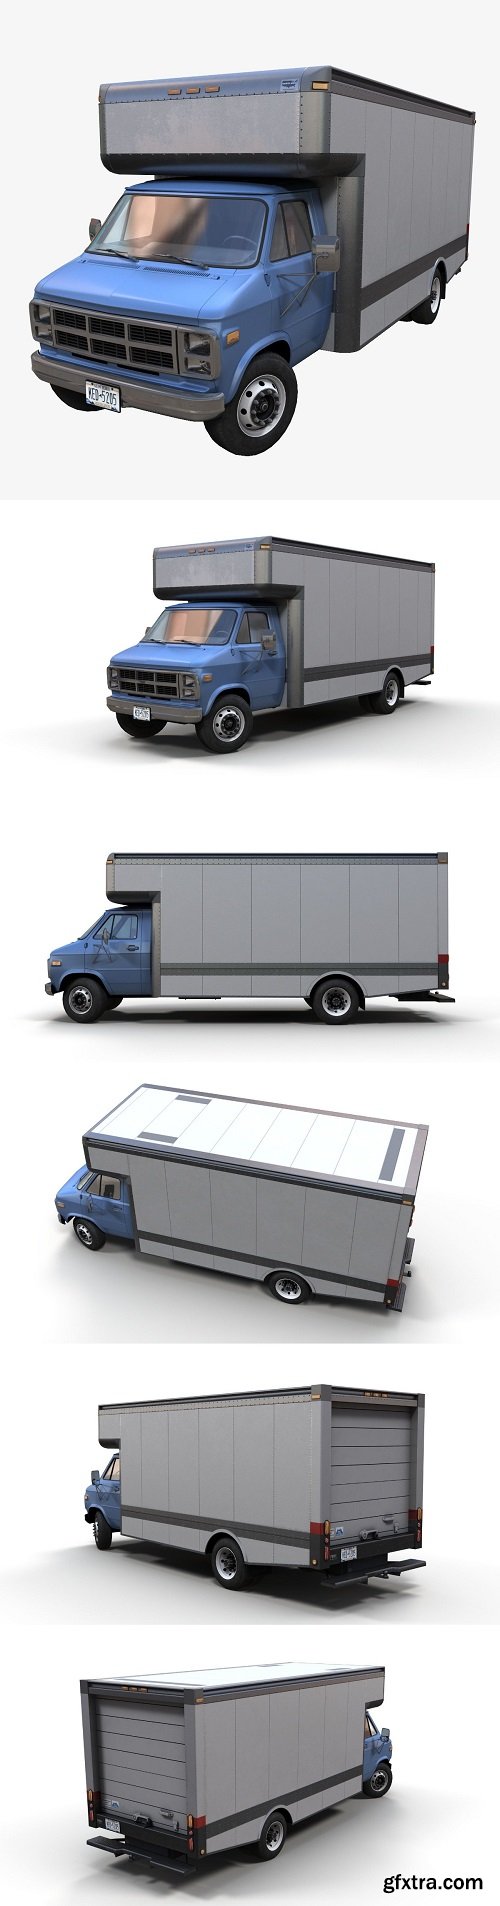 Moving box van Low-poly 3D model